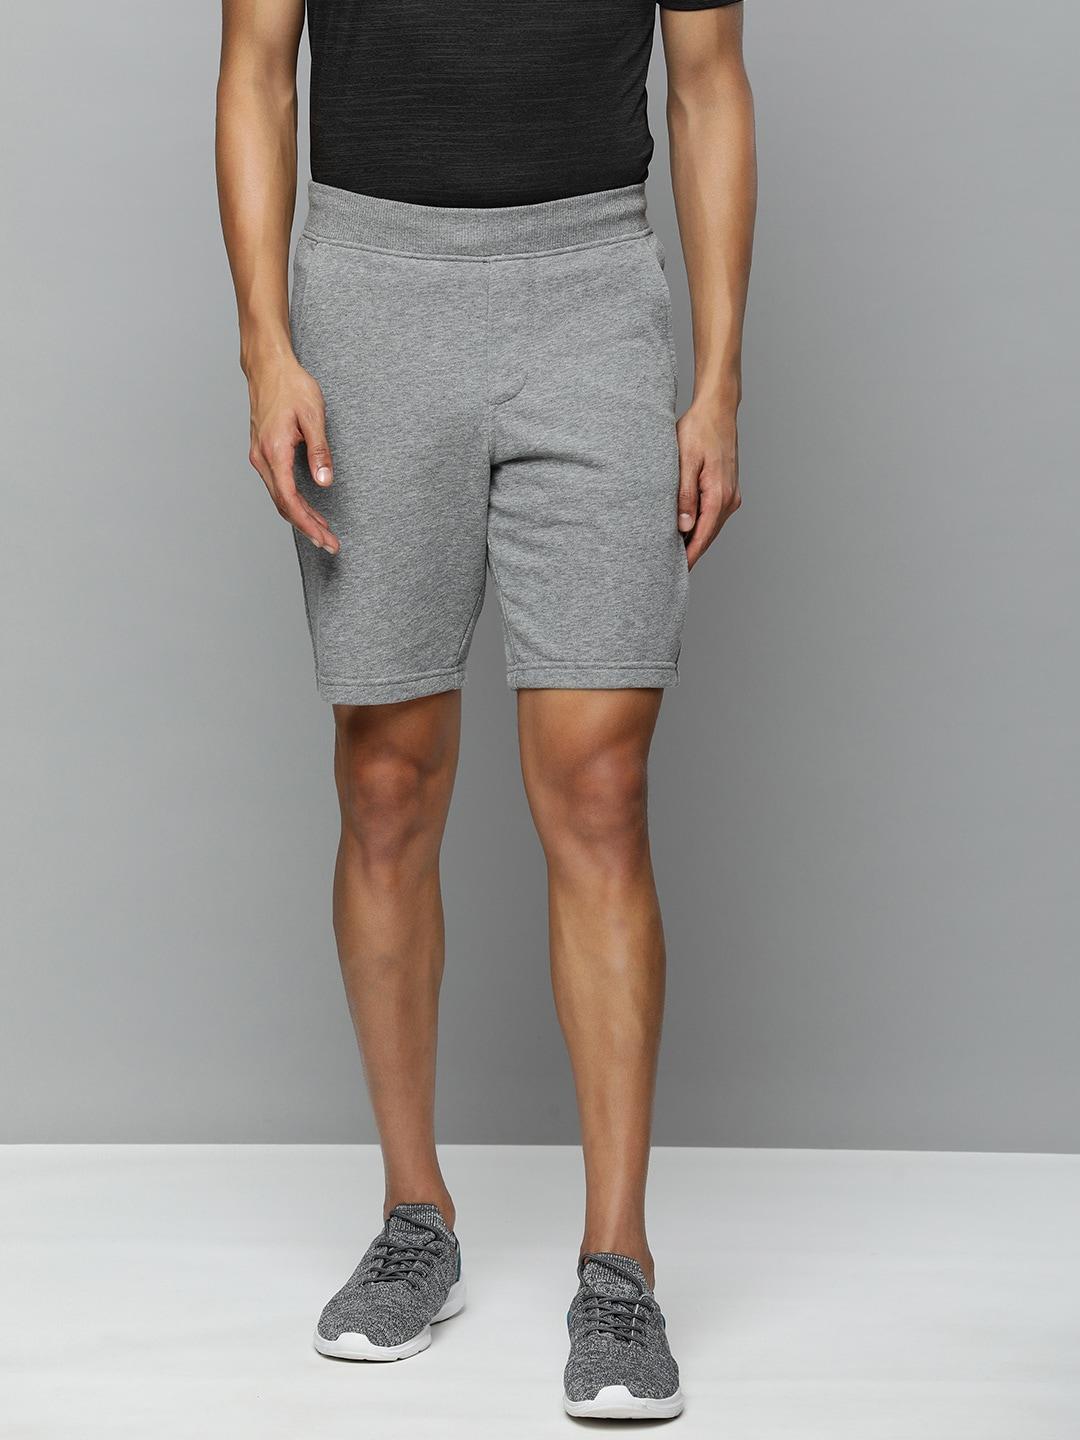 skechers men grey sports shorts with e-dry technology technology